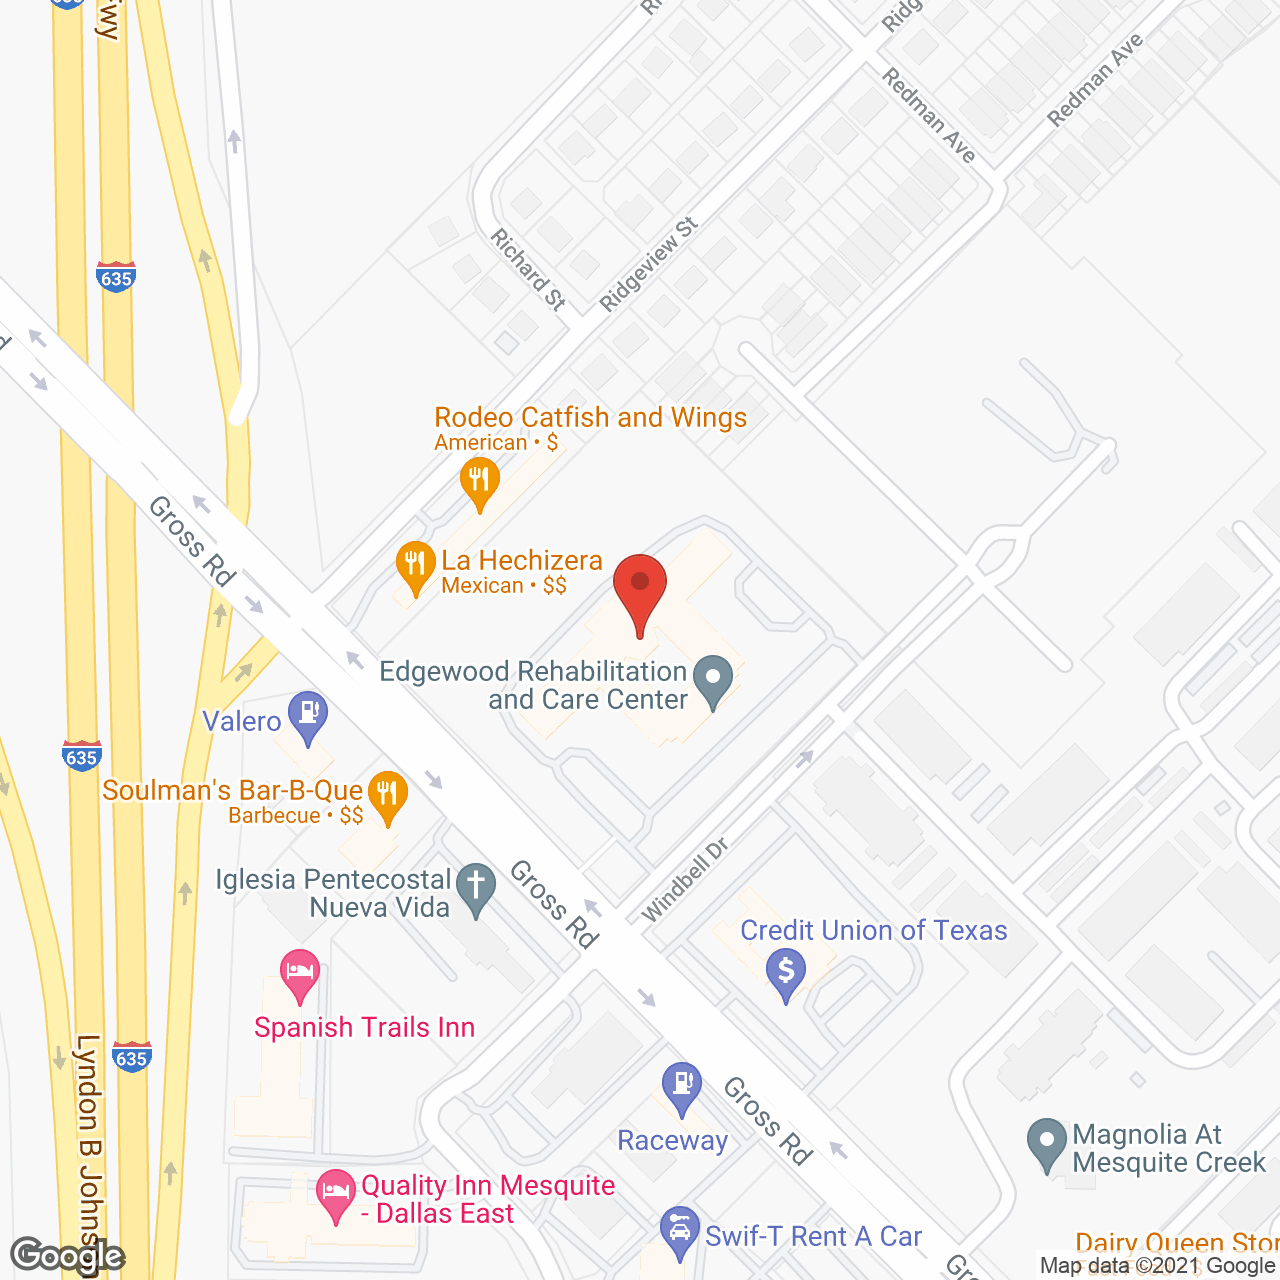 Edgewood Rehabilitation & Care Center in google map